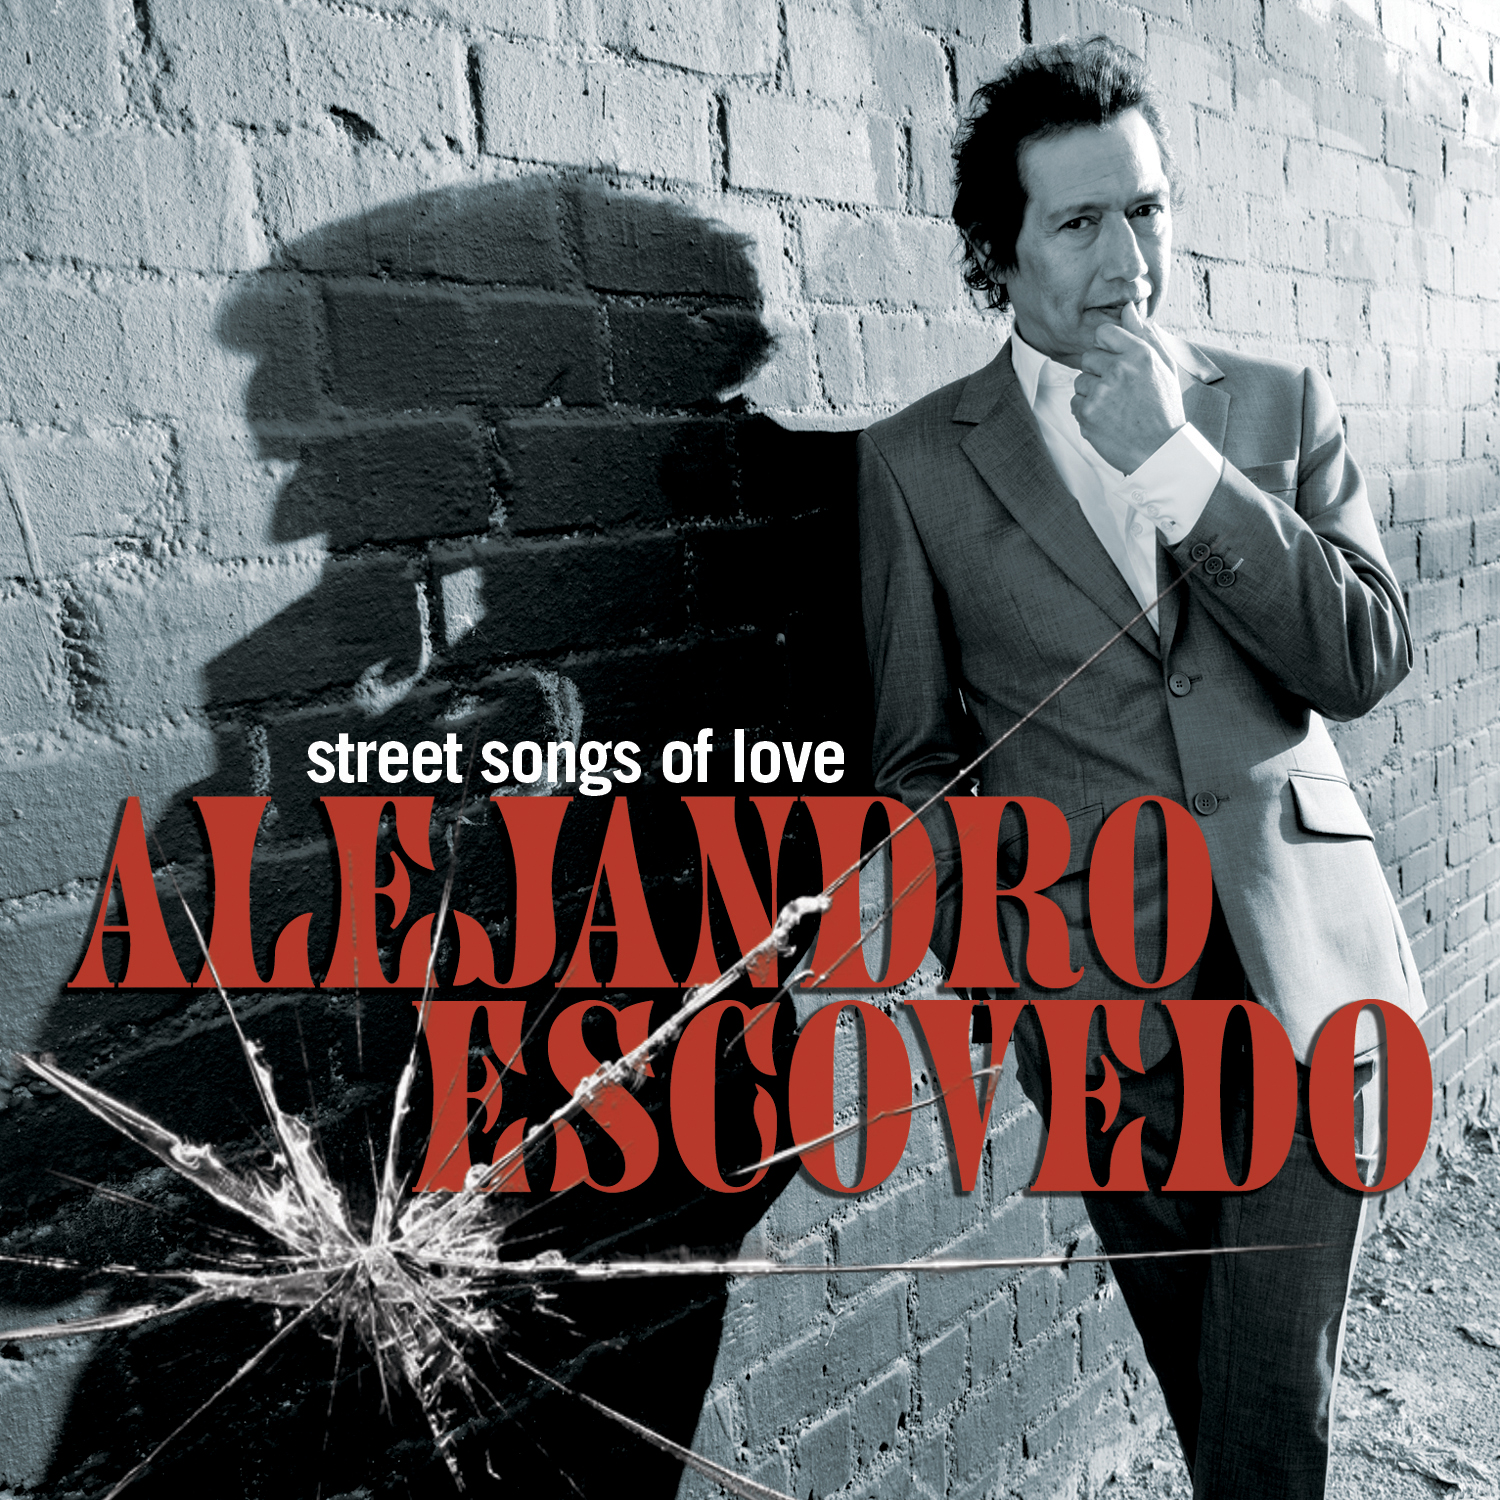 Alejandro Escovedo: Street Songs of Love